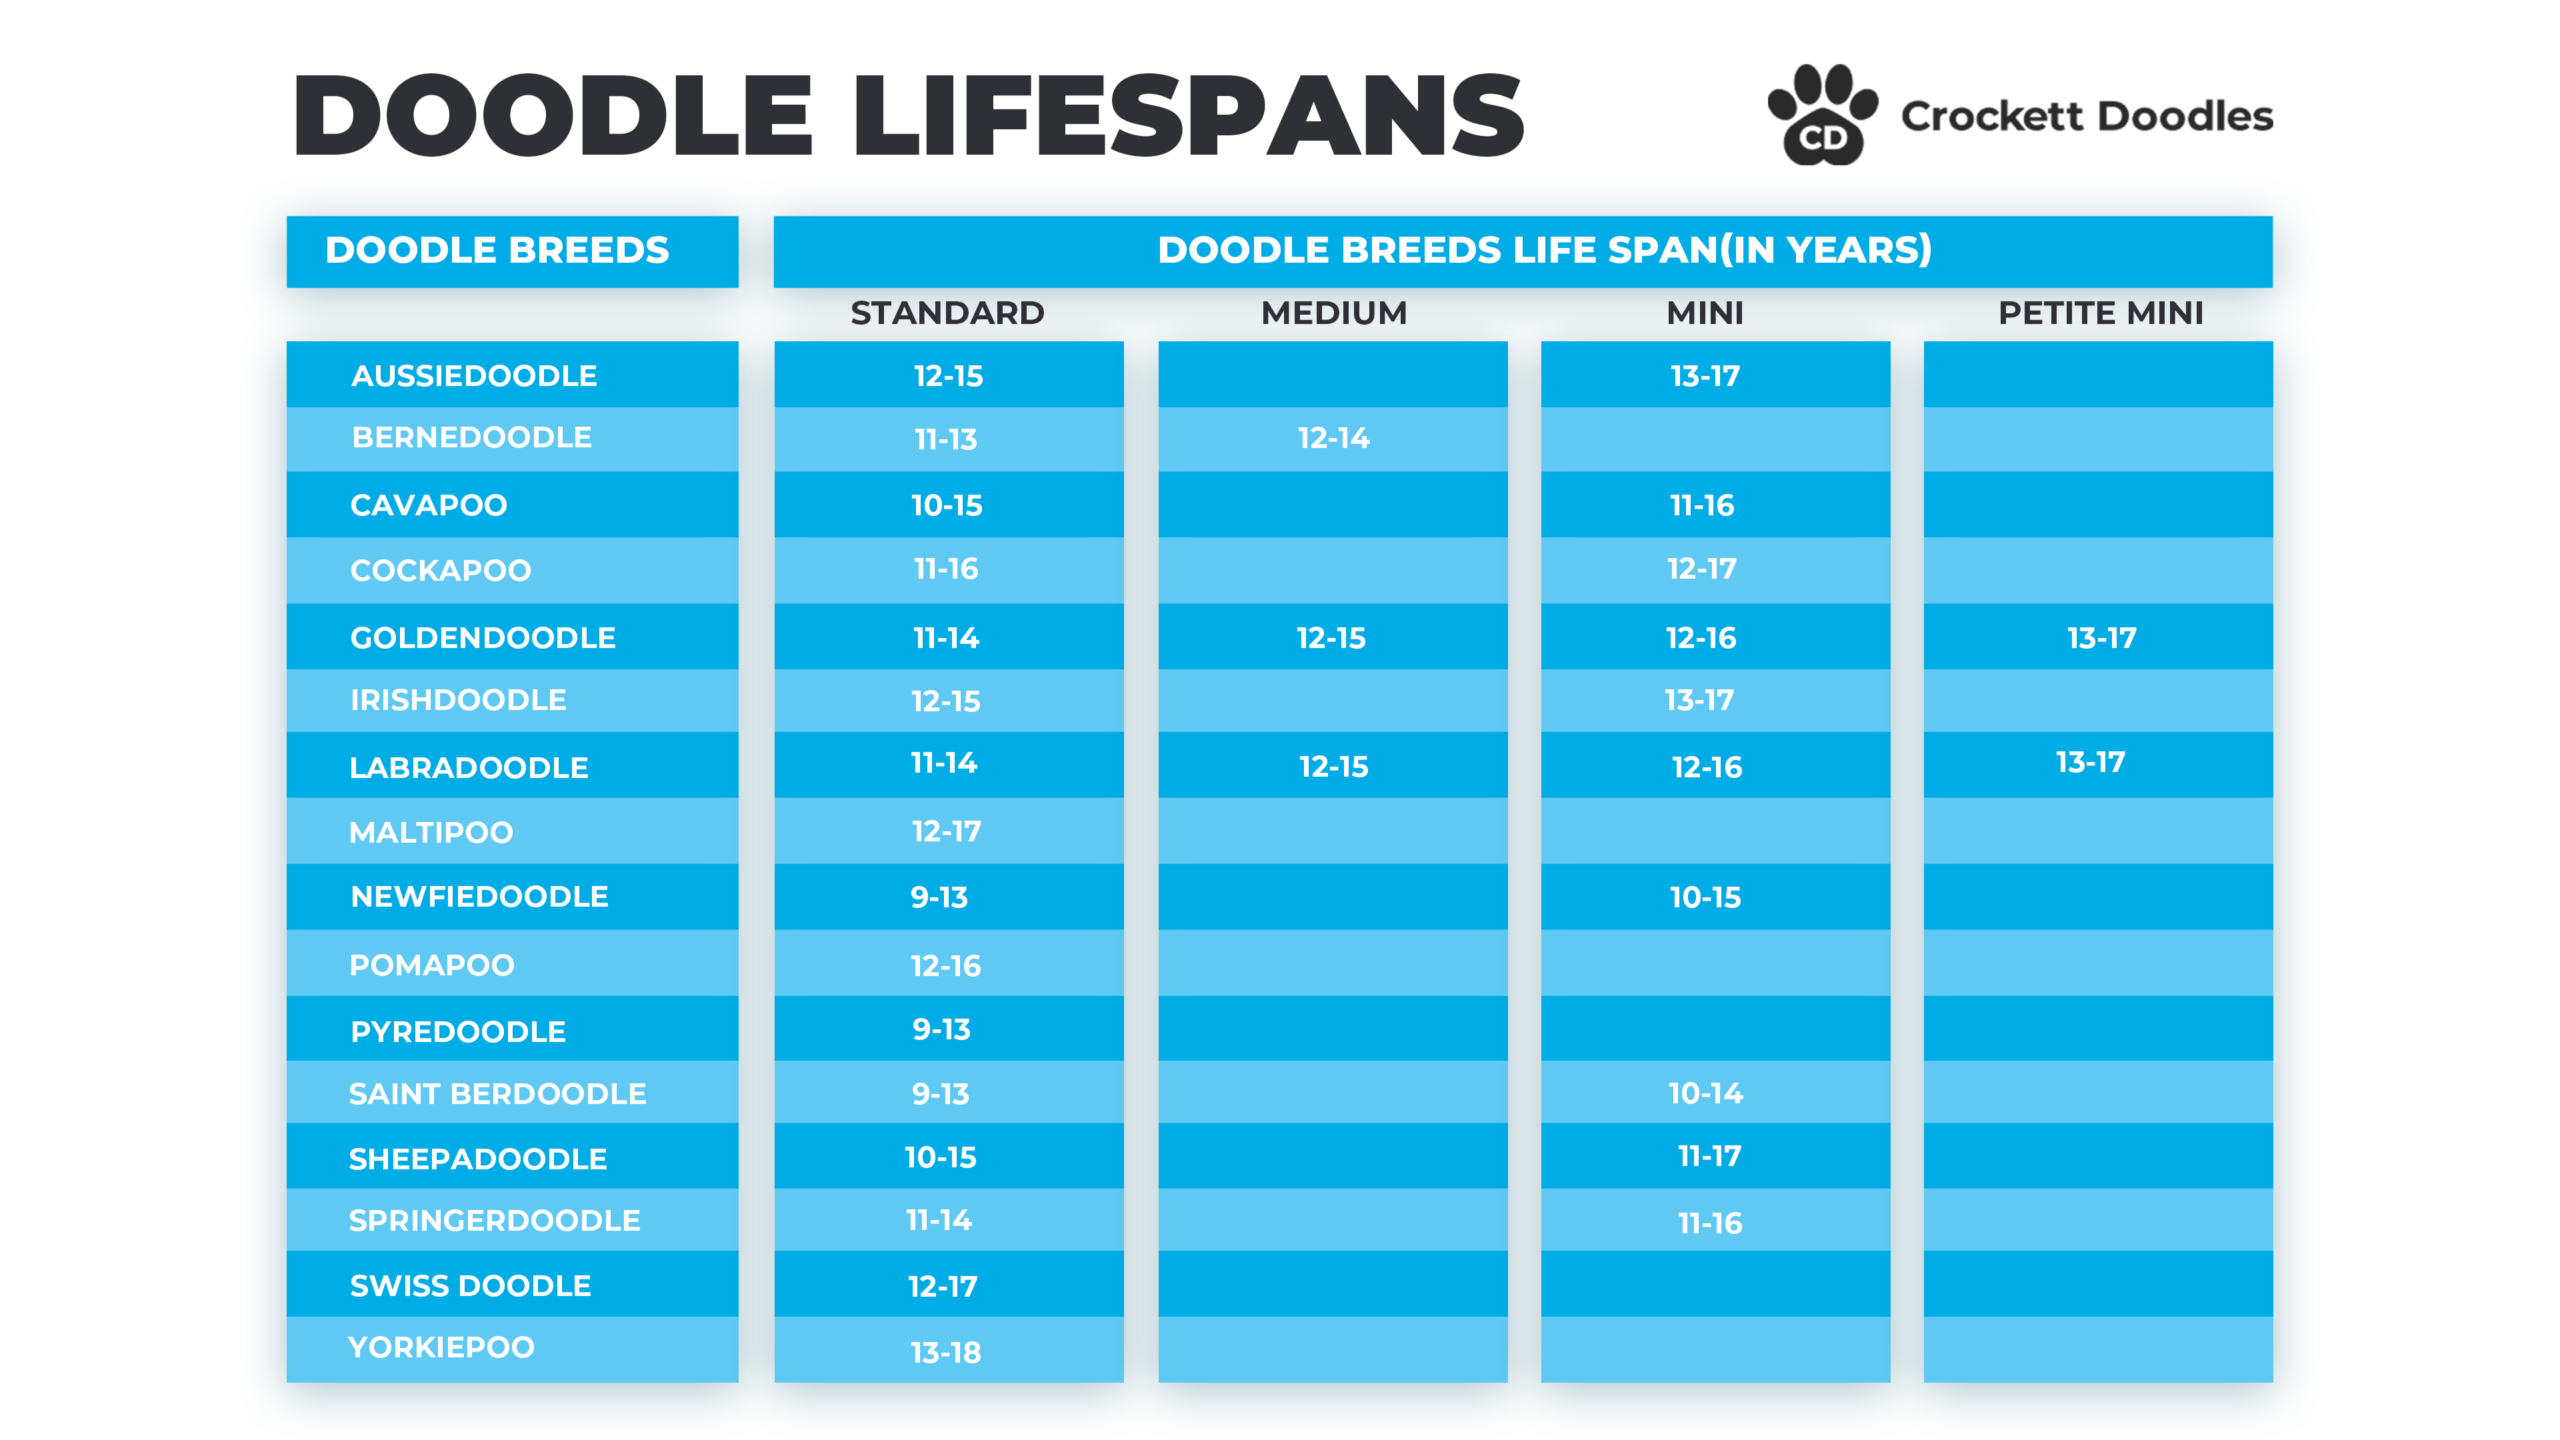 Doodle Lifespan Infographic